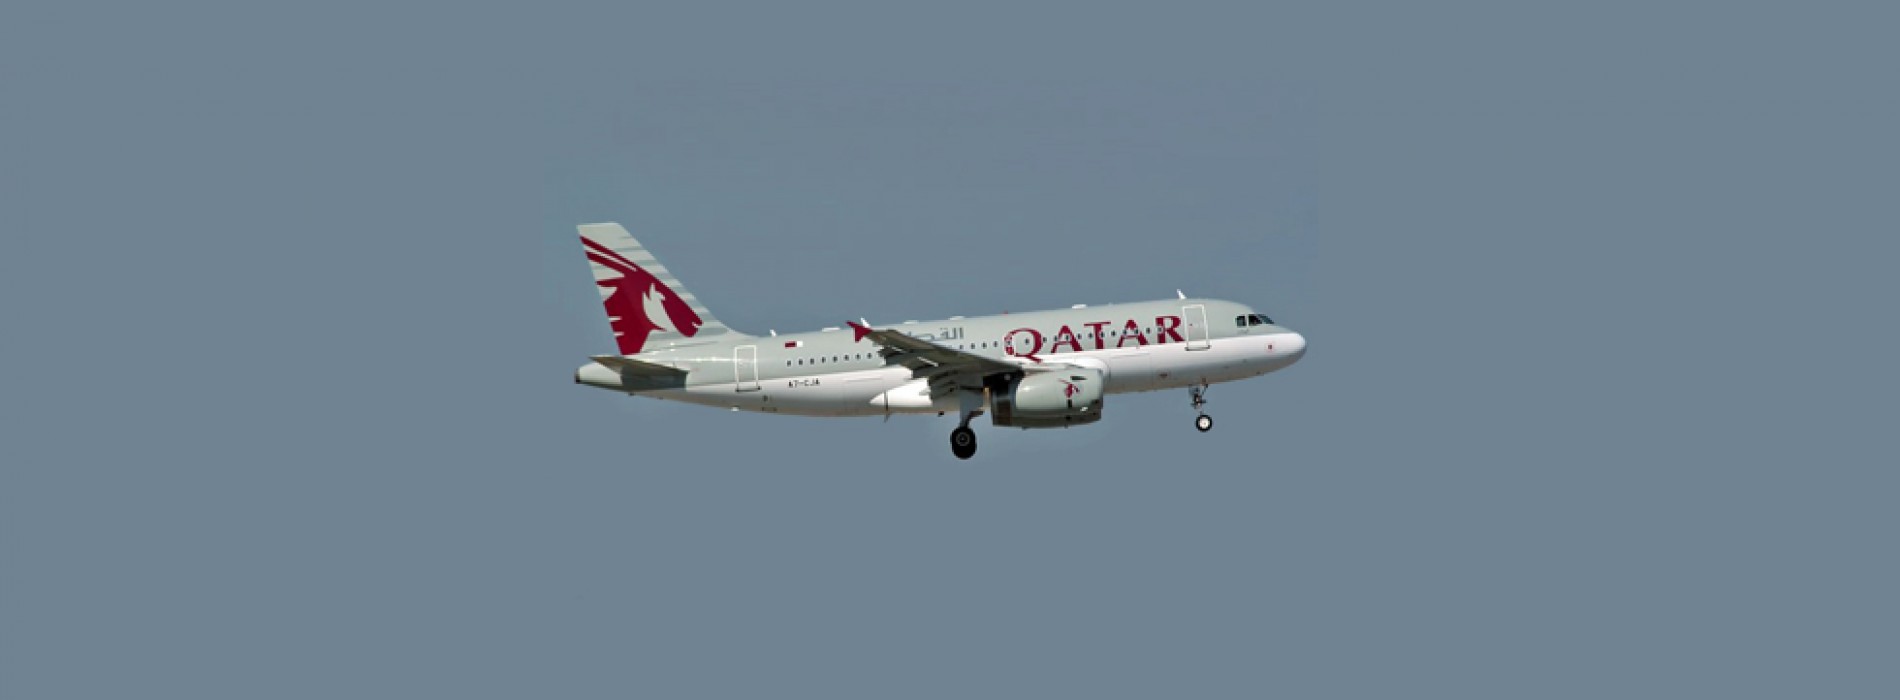 Qatar Airways hastens India push, plans 100 new jets amid Modi’s aviation drive